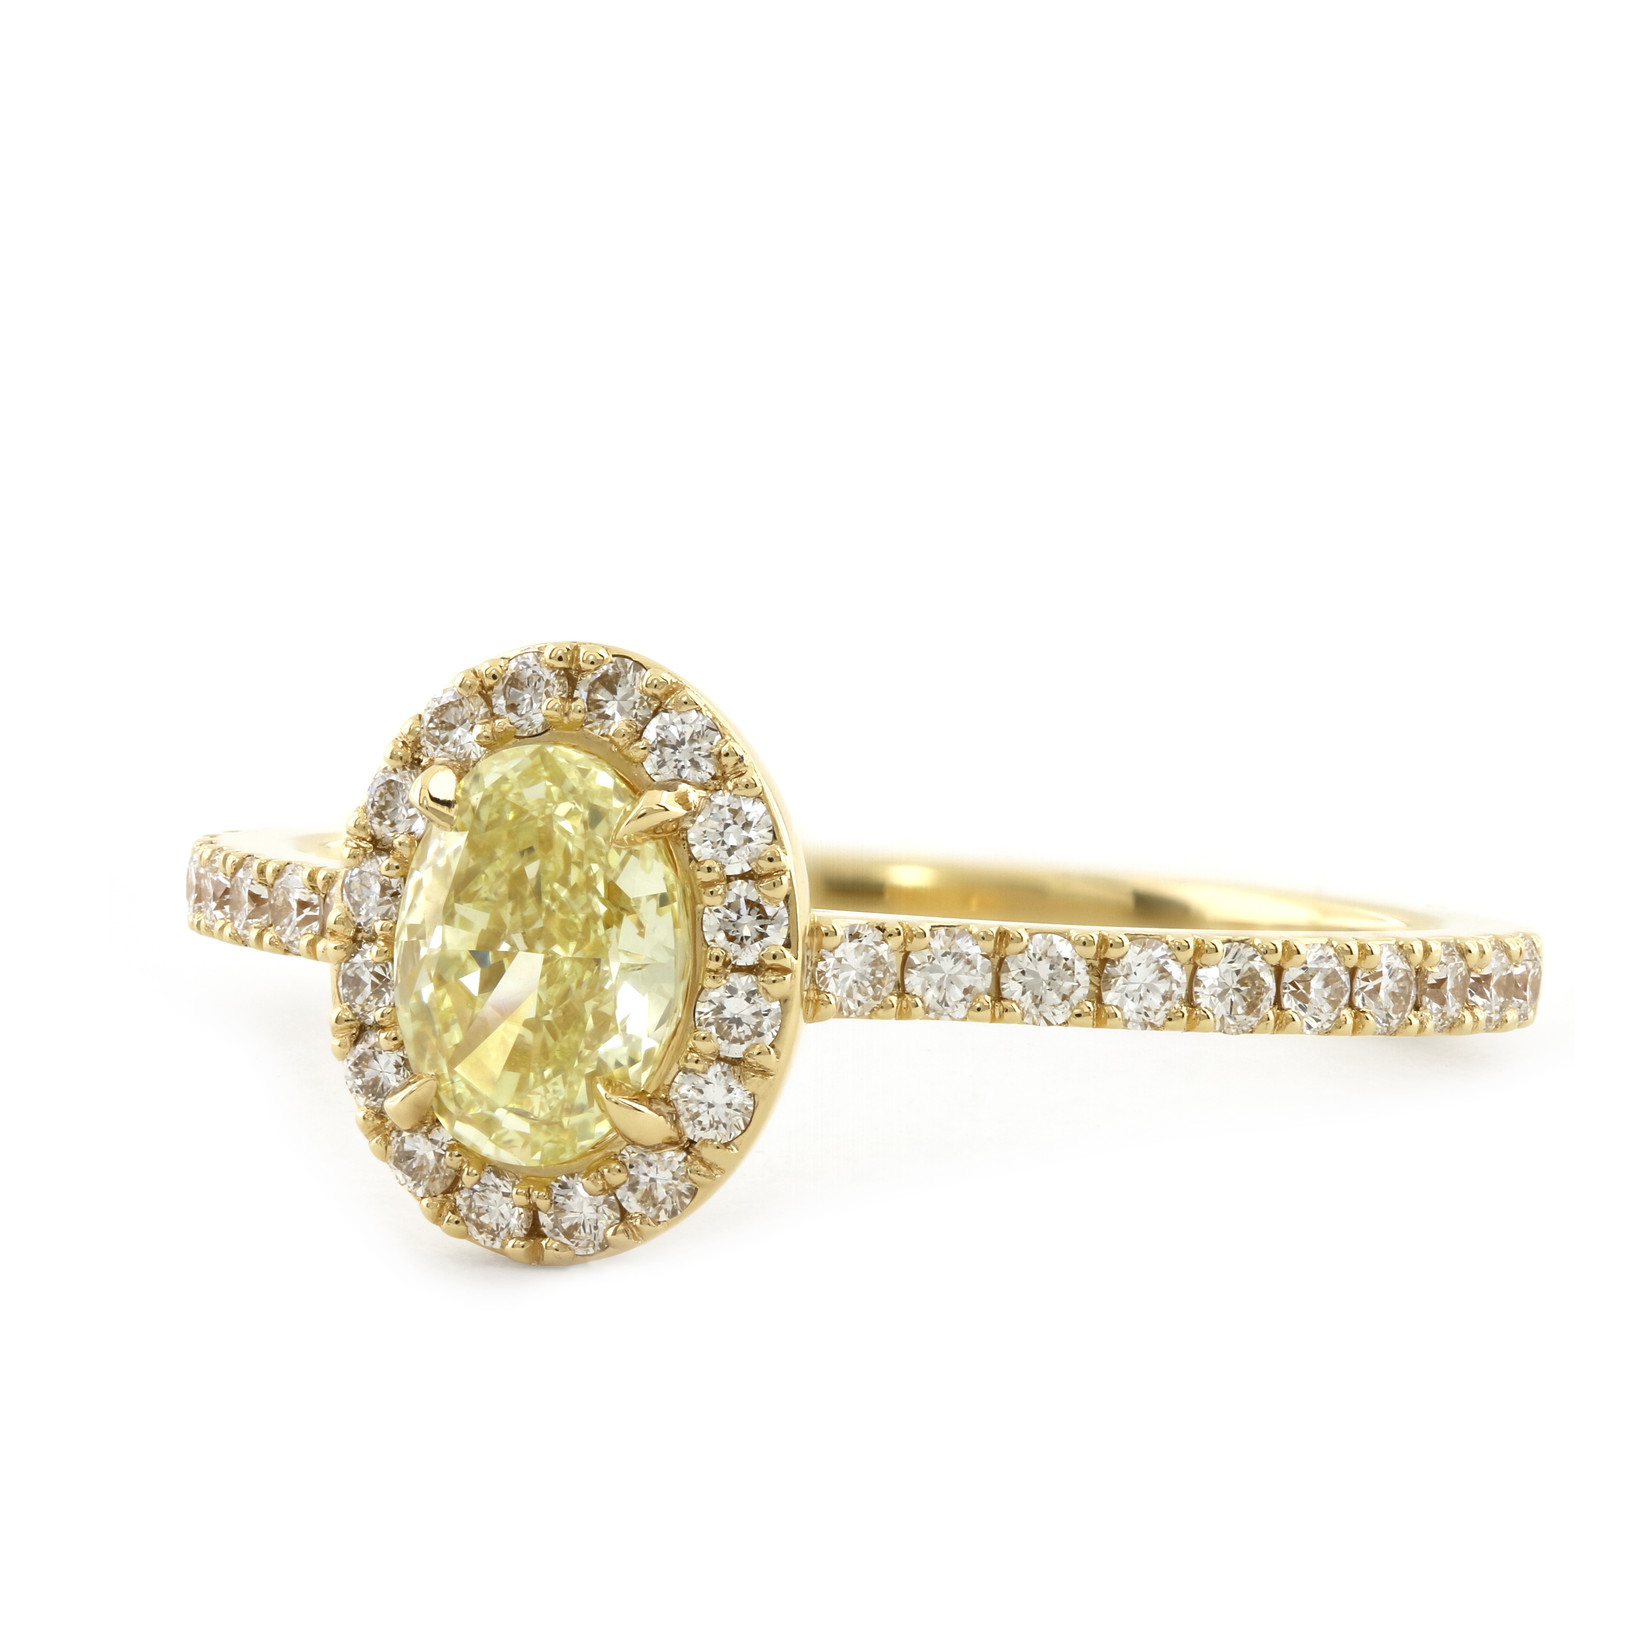 Baxter Moerman Kinsley Ring with Oval Fancy Yellow Diamond